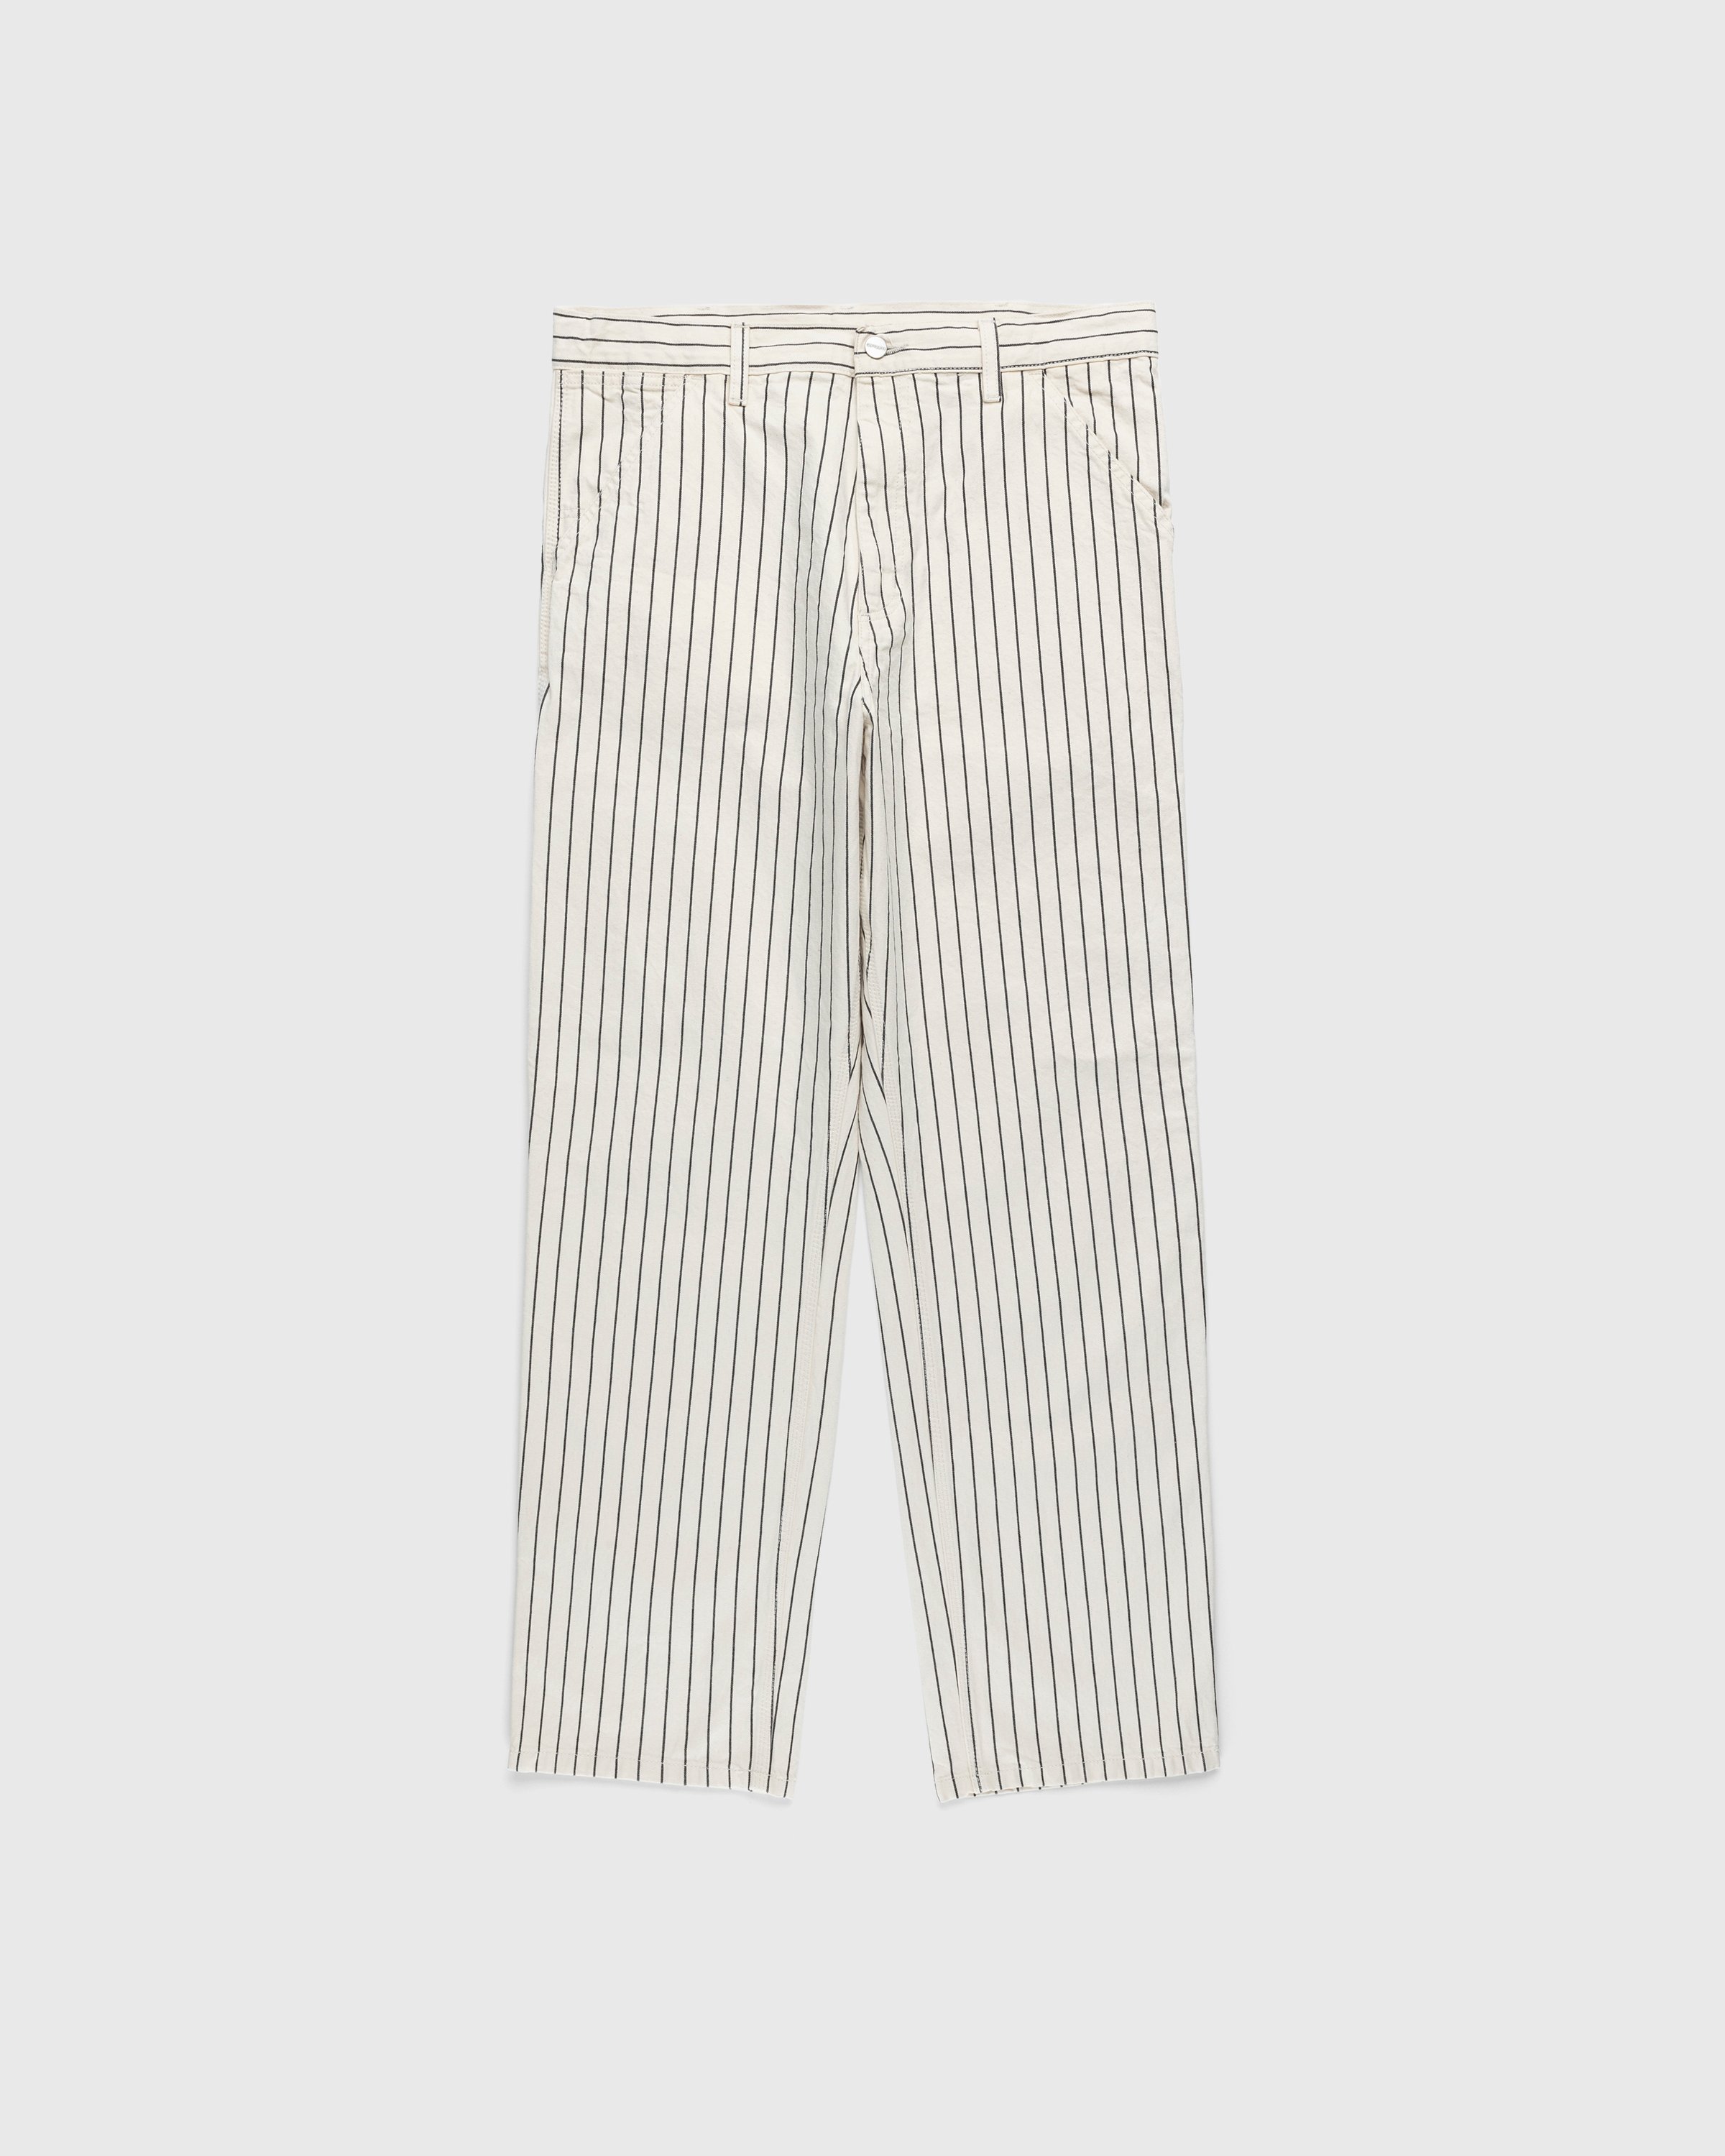 Carhartt WIP - Trade Single Knee Pant Wax/Black Rinsed - Clothing - White - Image 1